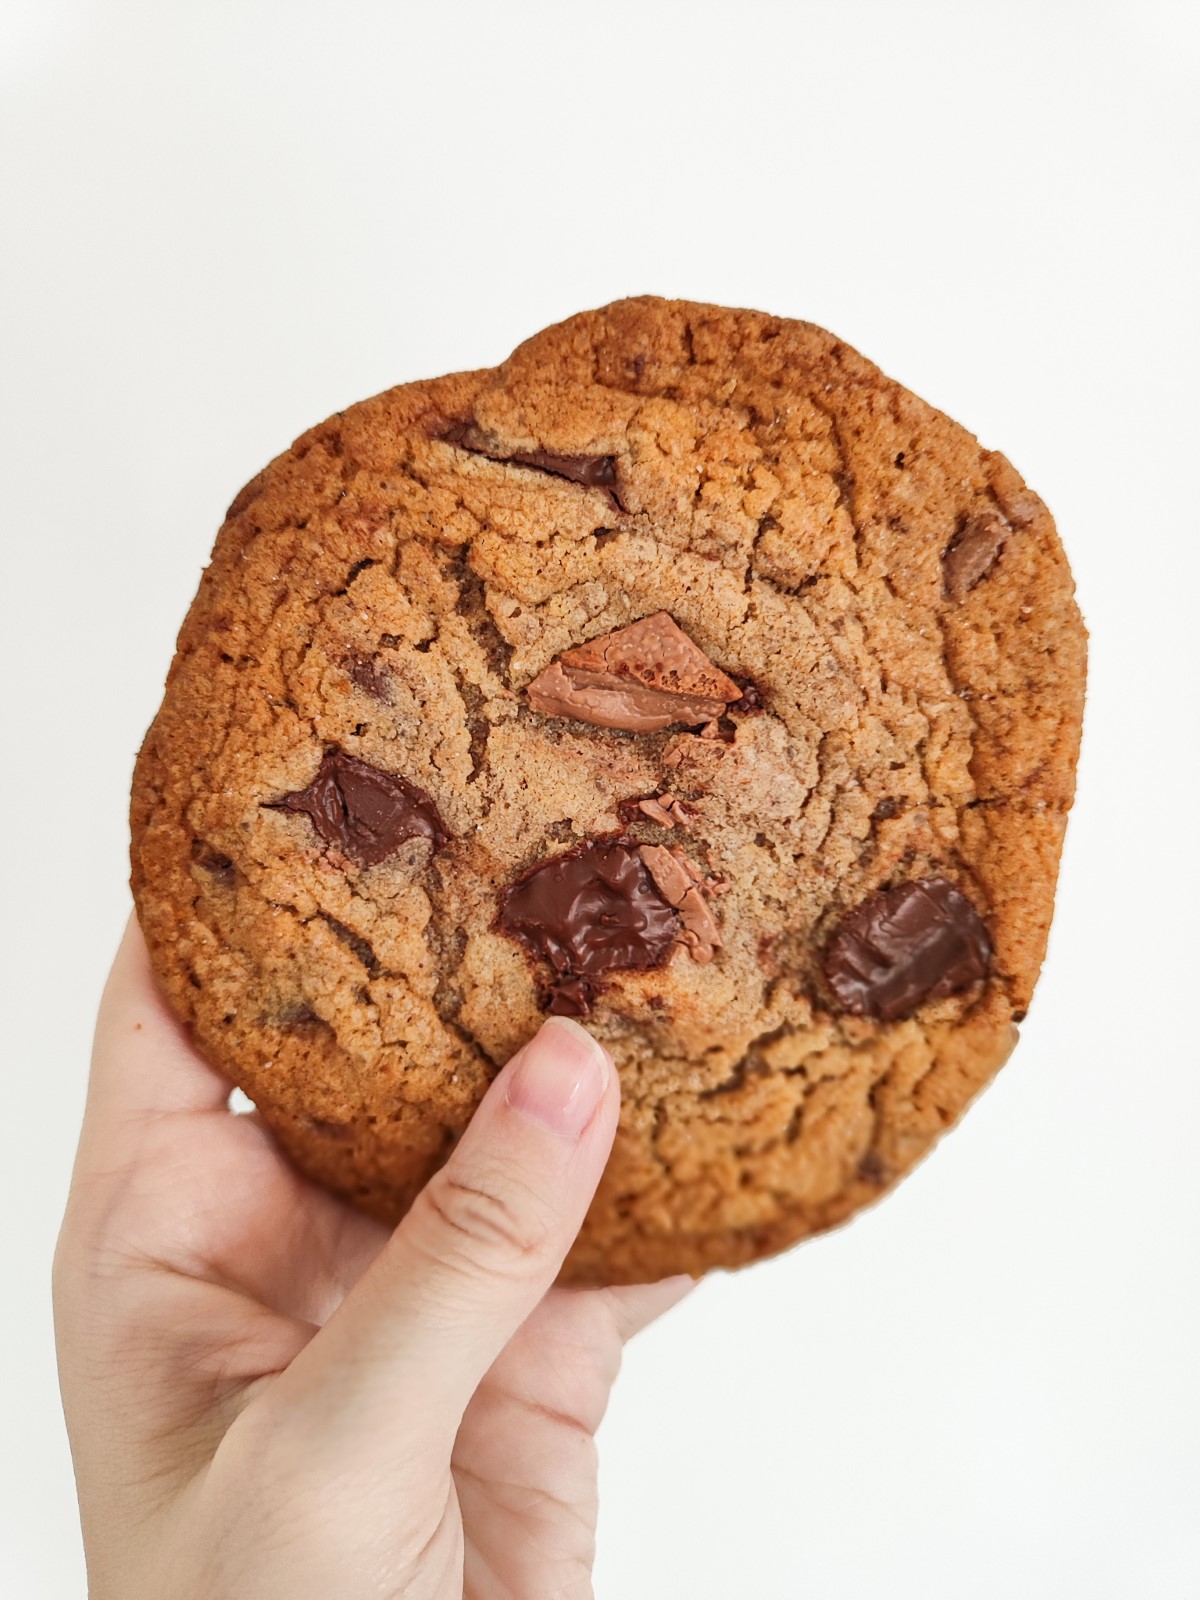 Ameriški čokoladni piškoti (chocolate chip cookies)  - alt